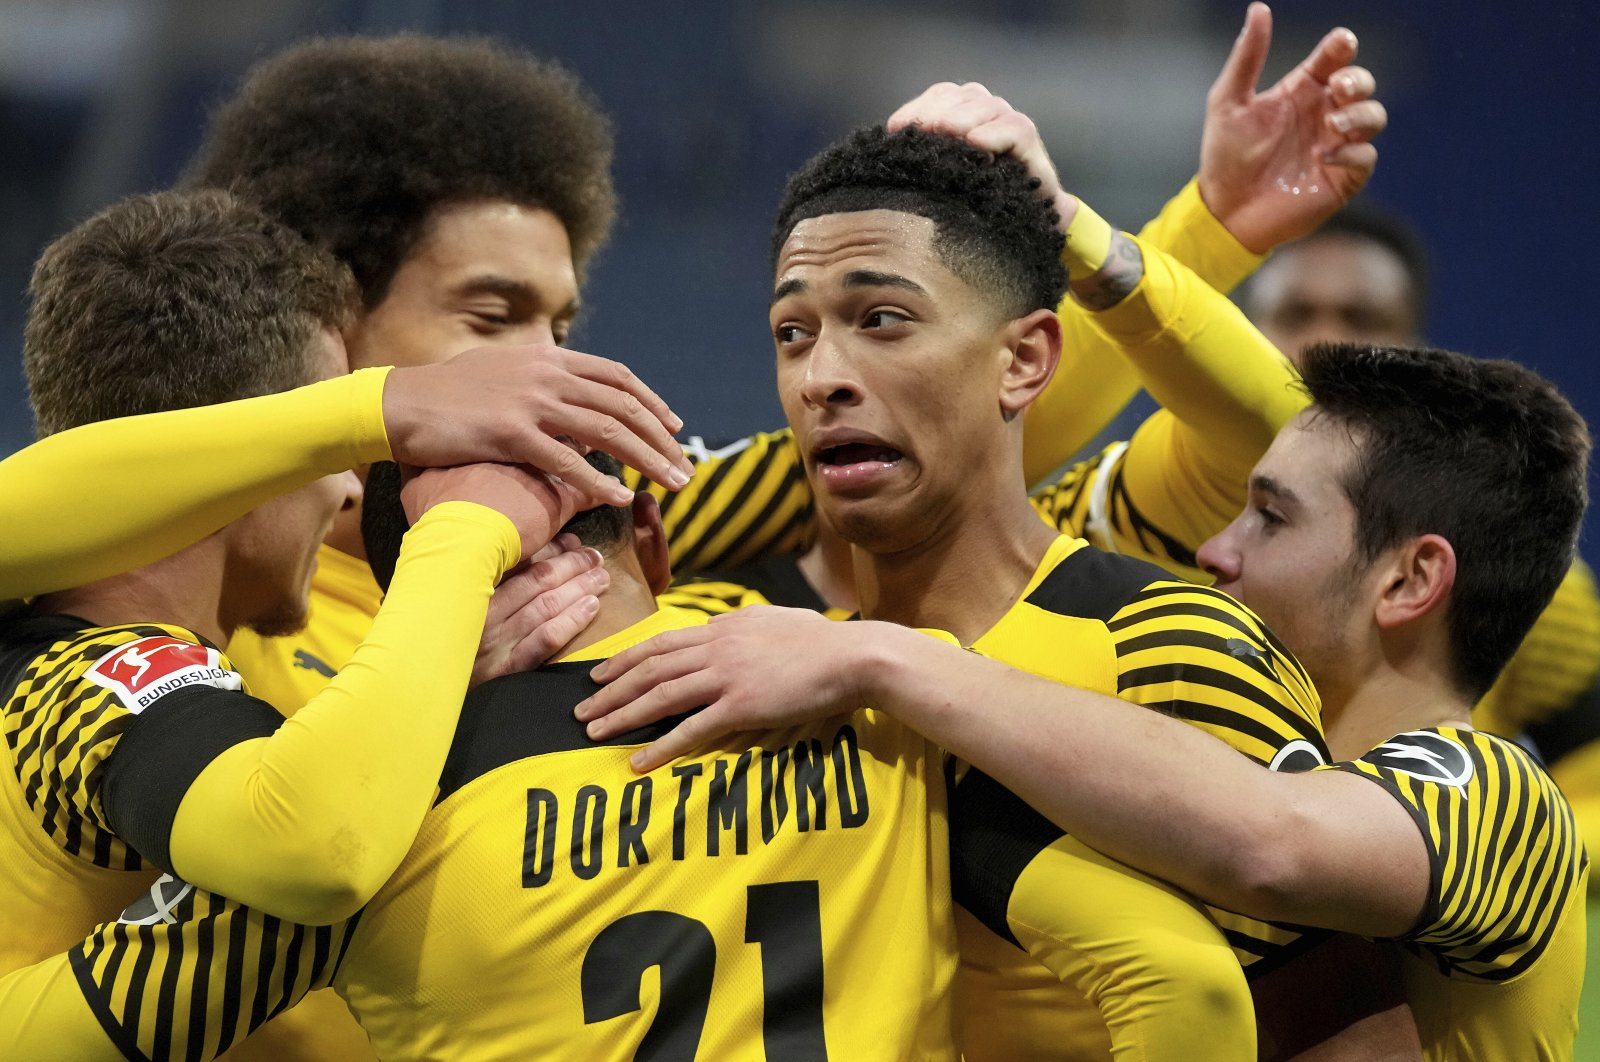 Dortmund players celebrate after scoring their side&#039;s third goal during a German Bundesliga soccer match between TSG 1899 Hoffenheim and Borussia Dortmund in Sinsheim, Germany, Jan. 22, 2022. (AP Photo)